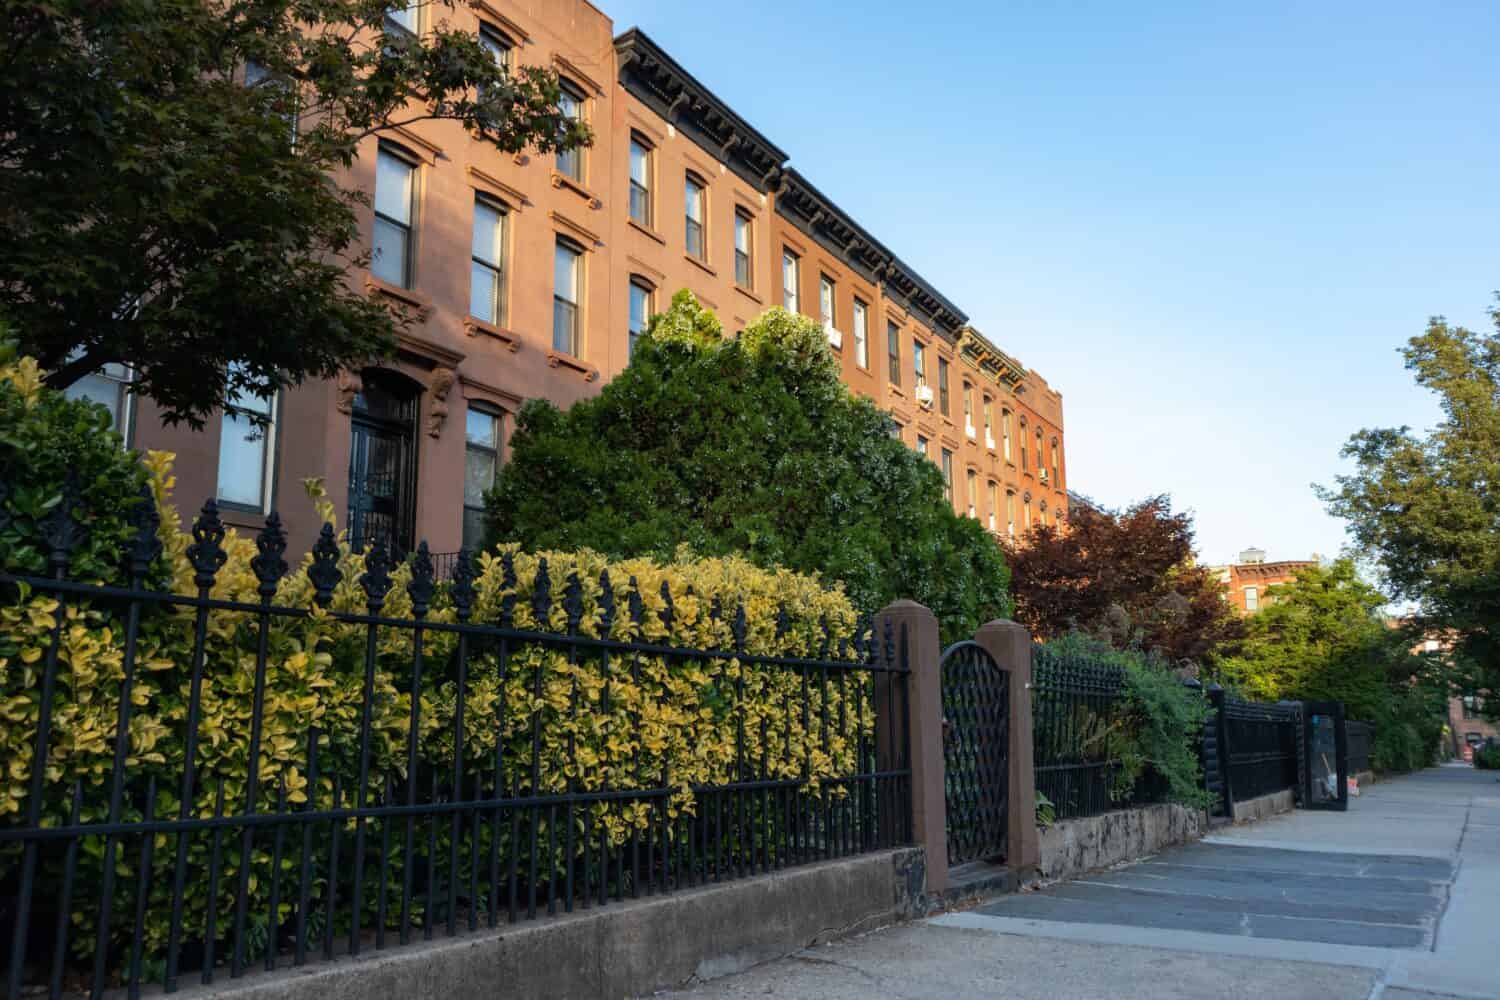 Beautiful Sidewalk and Row of Old Homes in Carroll Gardens Brooklyn of New York City